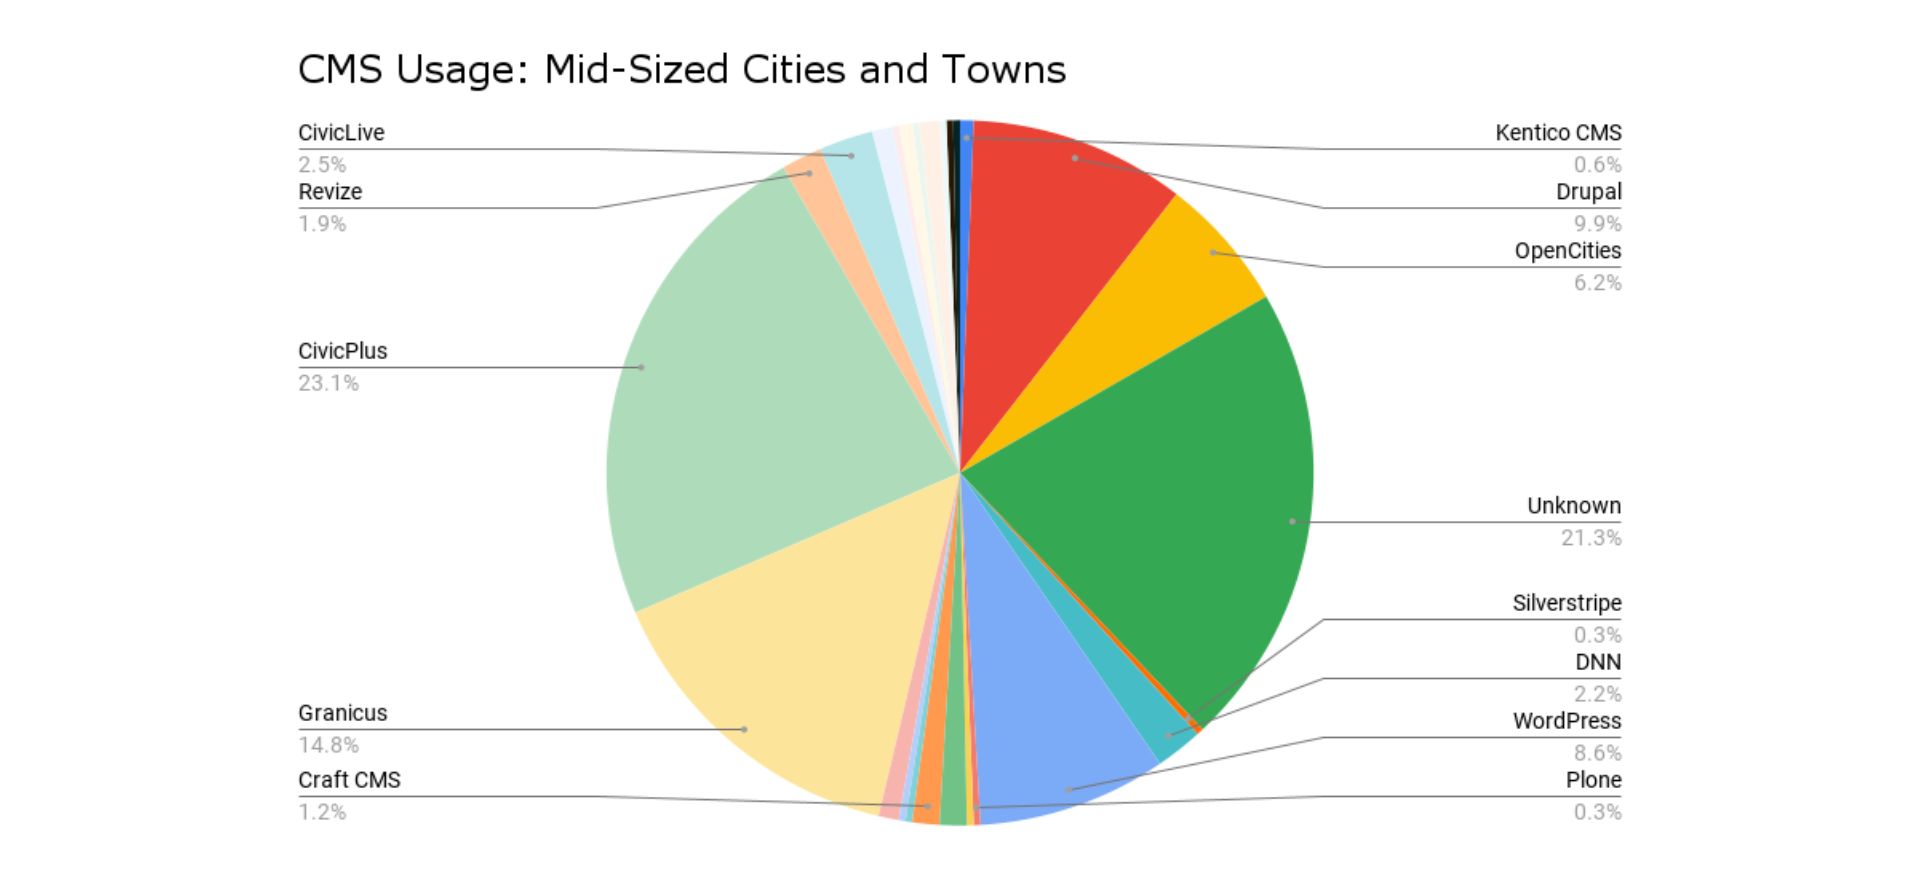 cms usage: midsized cities